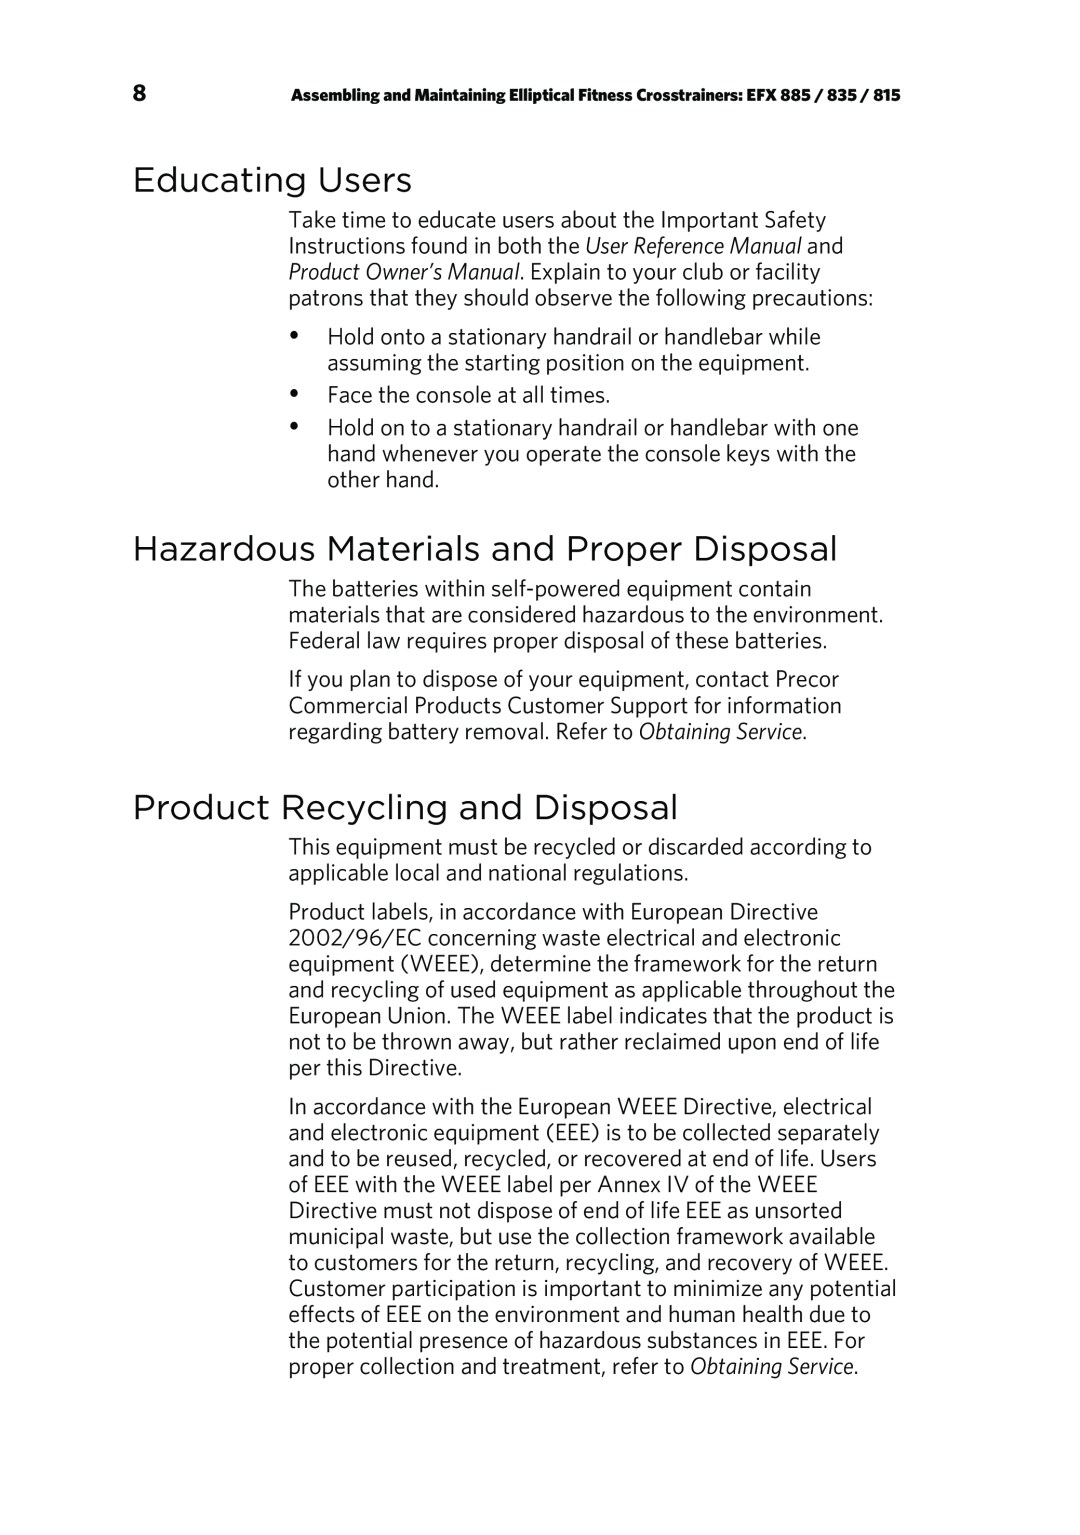 Precor P80 manual Educating Users, Hazardous Materials and Proper Disposal, Product Recycling and Disposal 